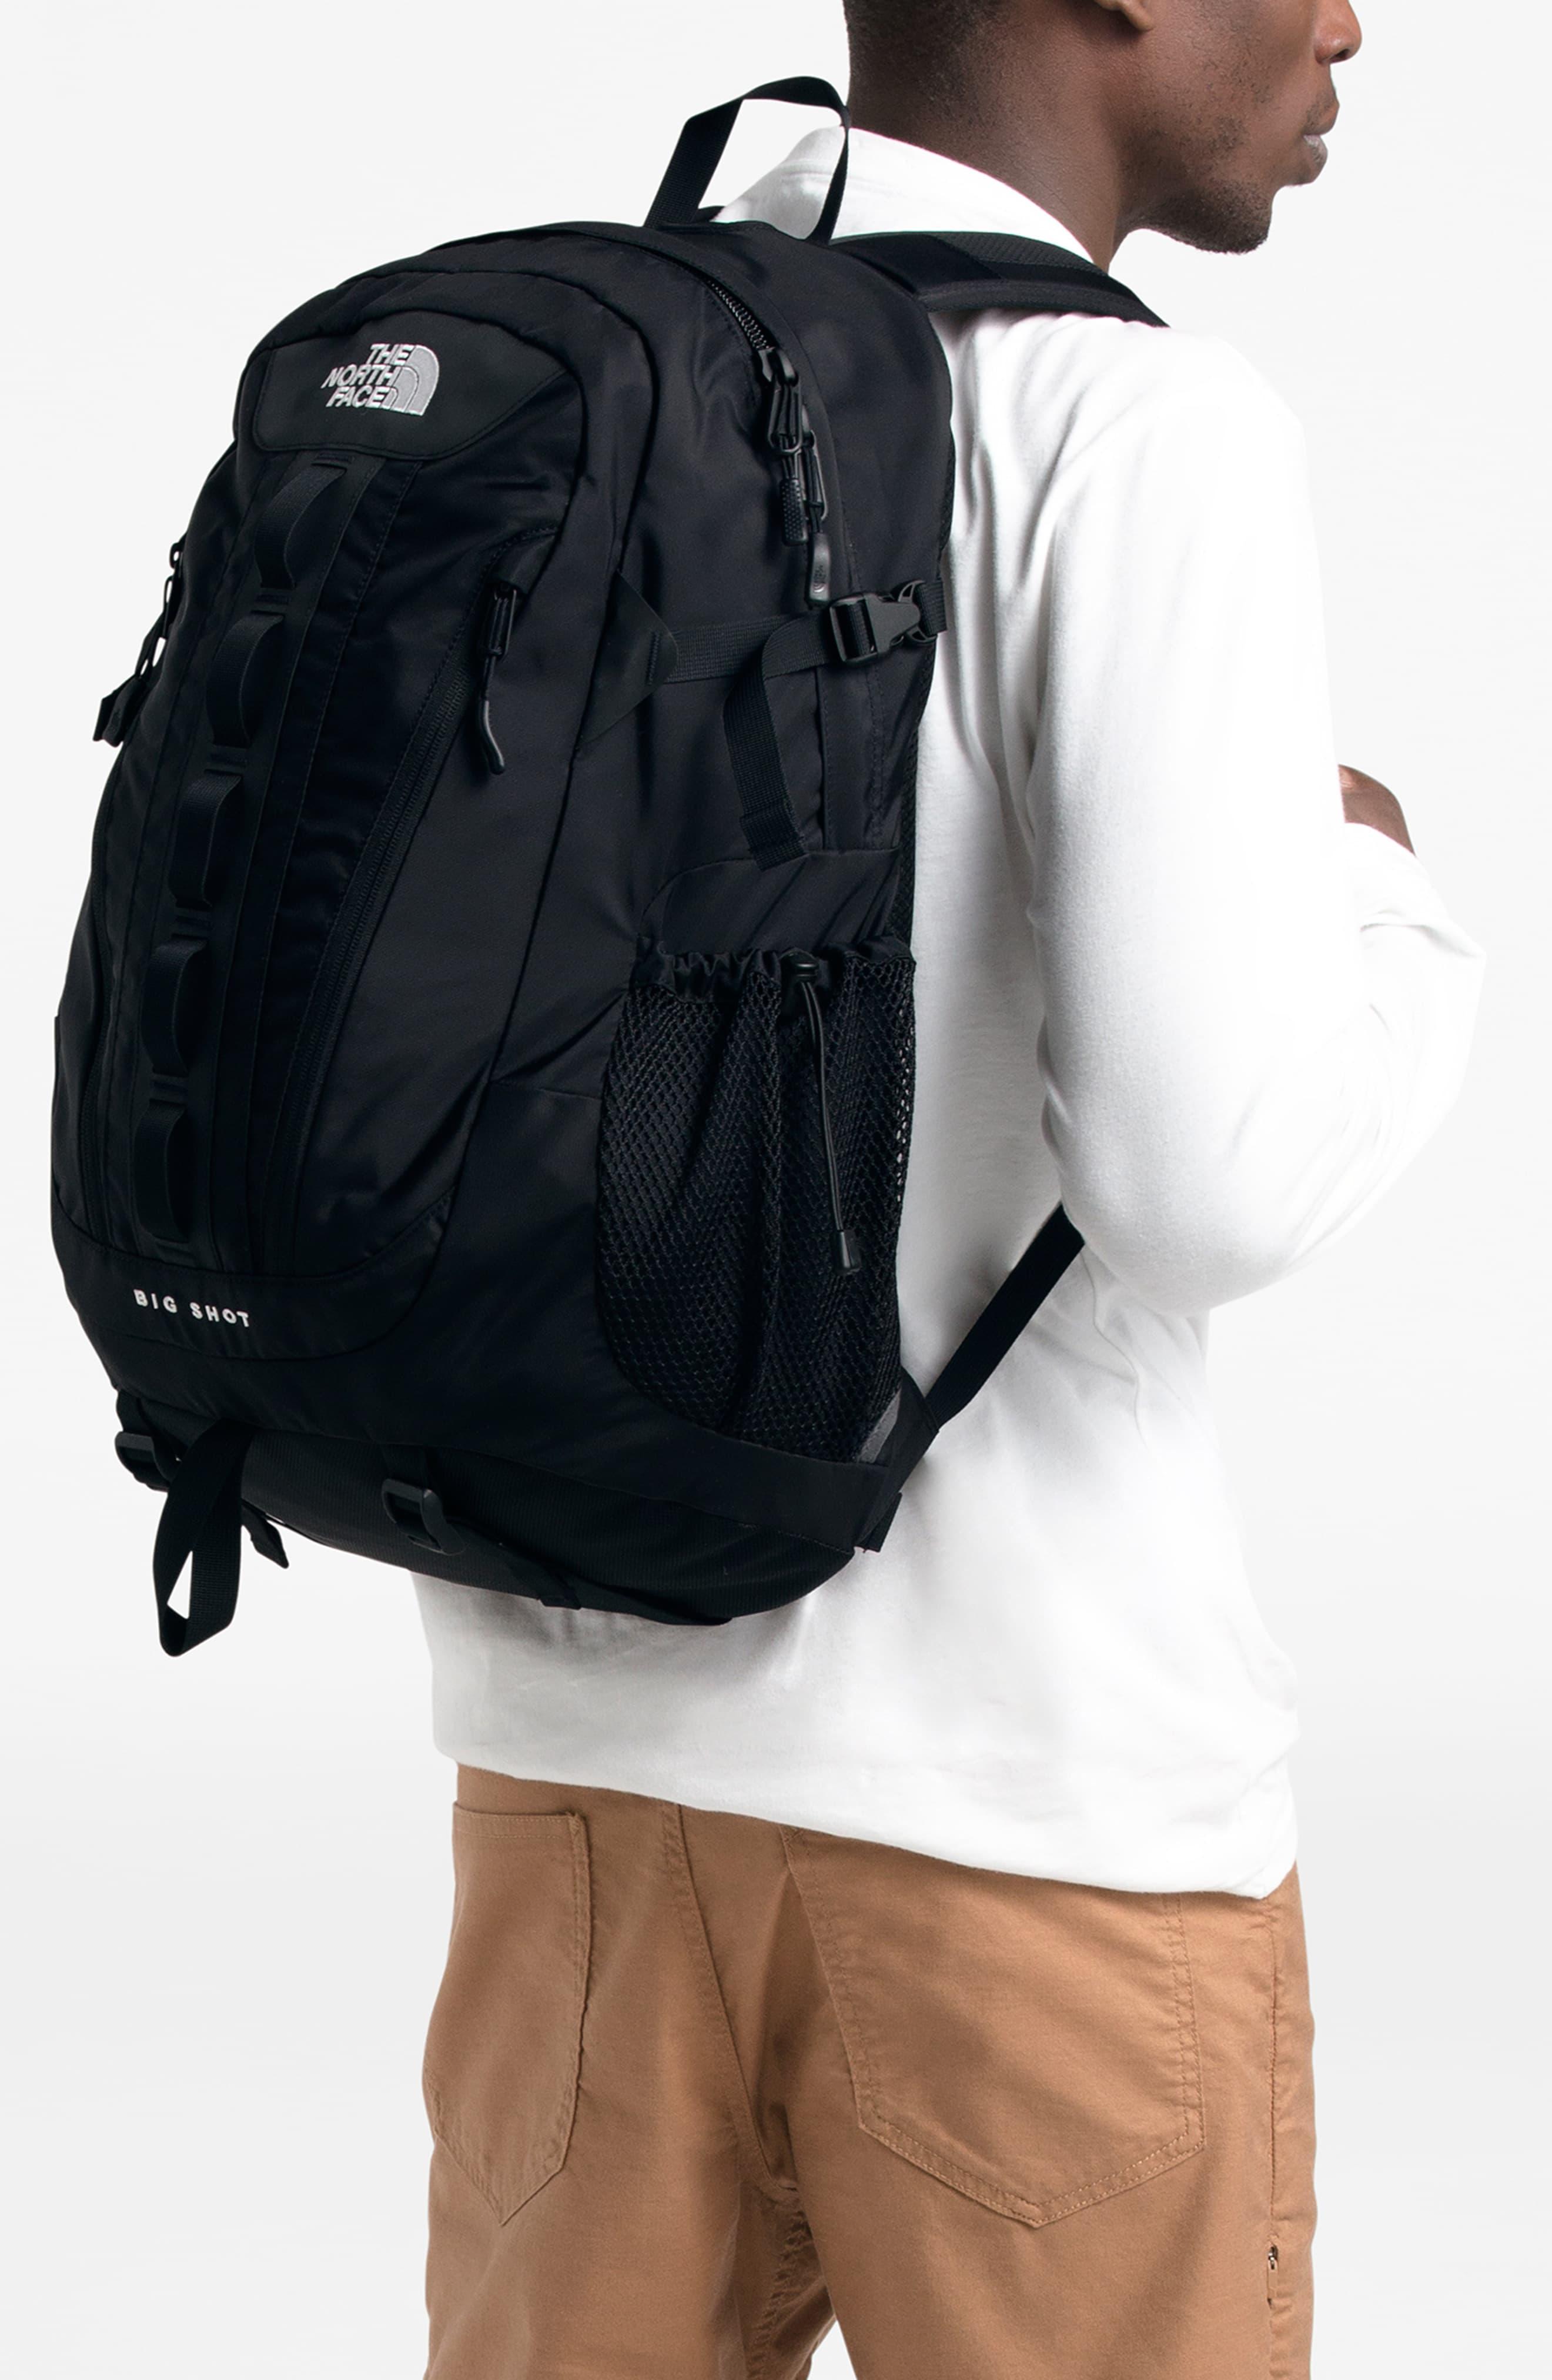 The North Face Big Shot Backpack in Black for Men - Lyst